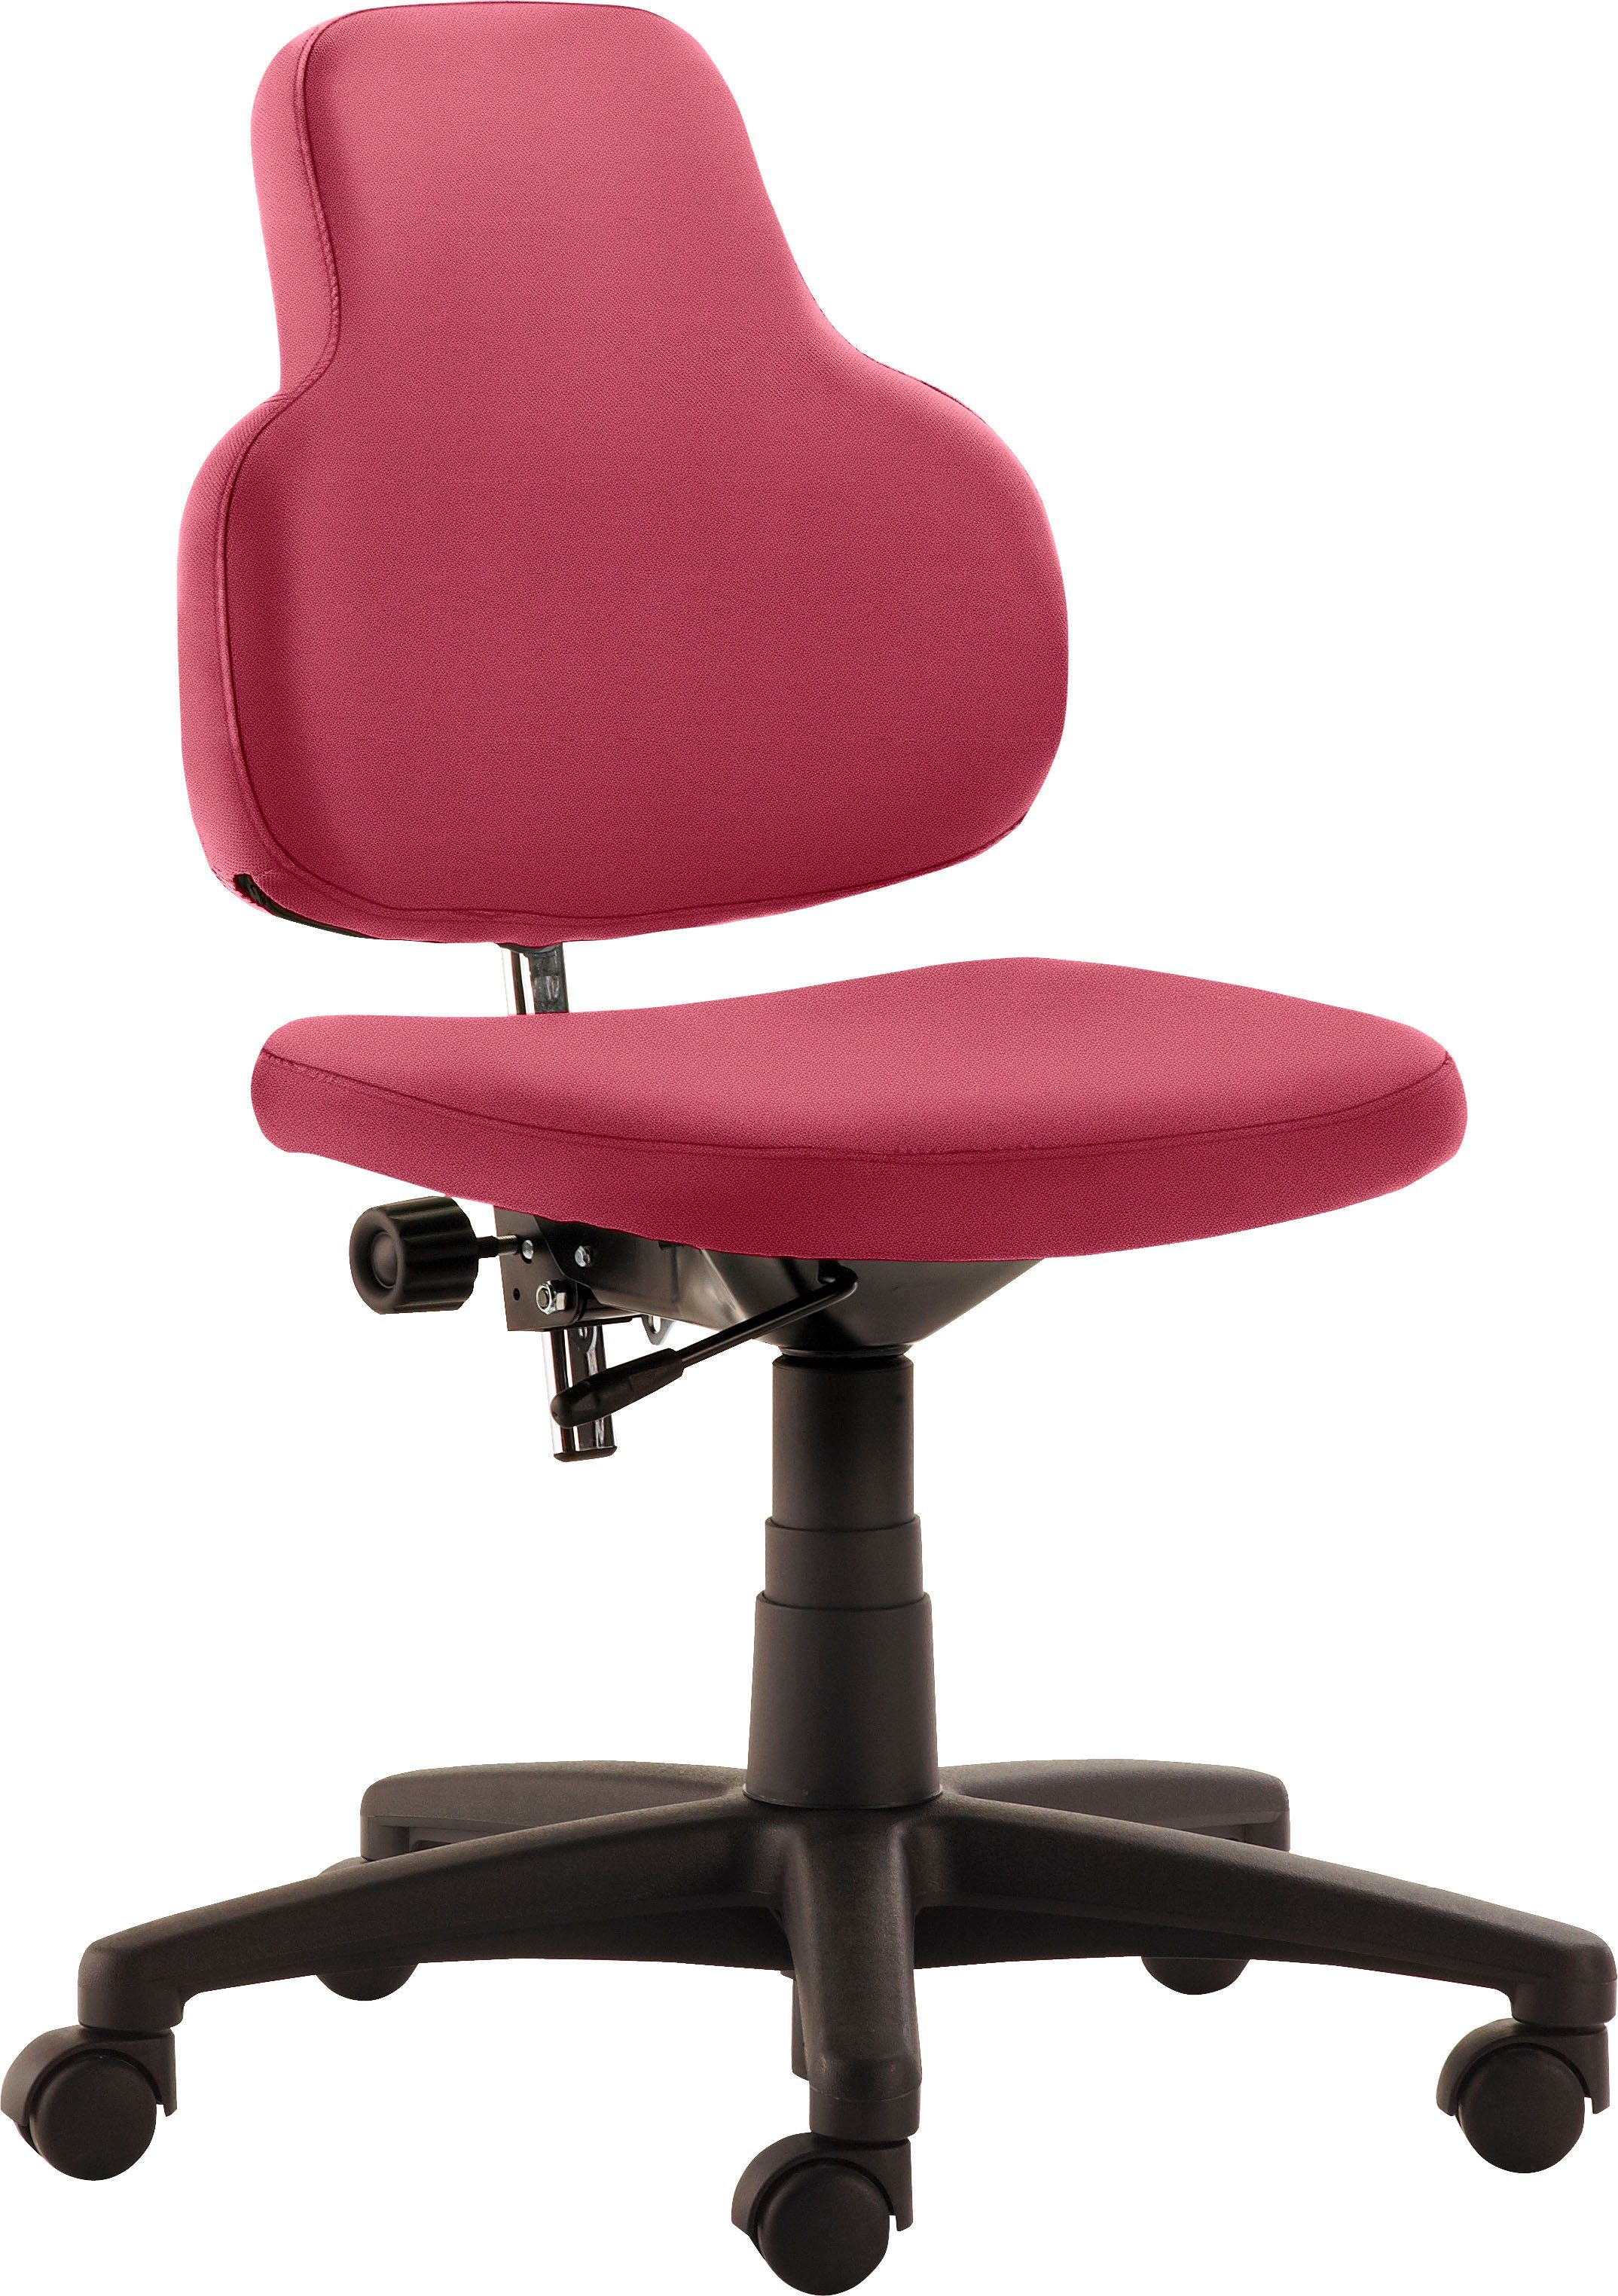 [Neu eingeführt] Mayer Sitzmöbel Bürostuhl rot-violett Kinderdrehstuhl mitwachsend | myONE, rot-violett